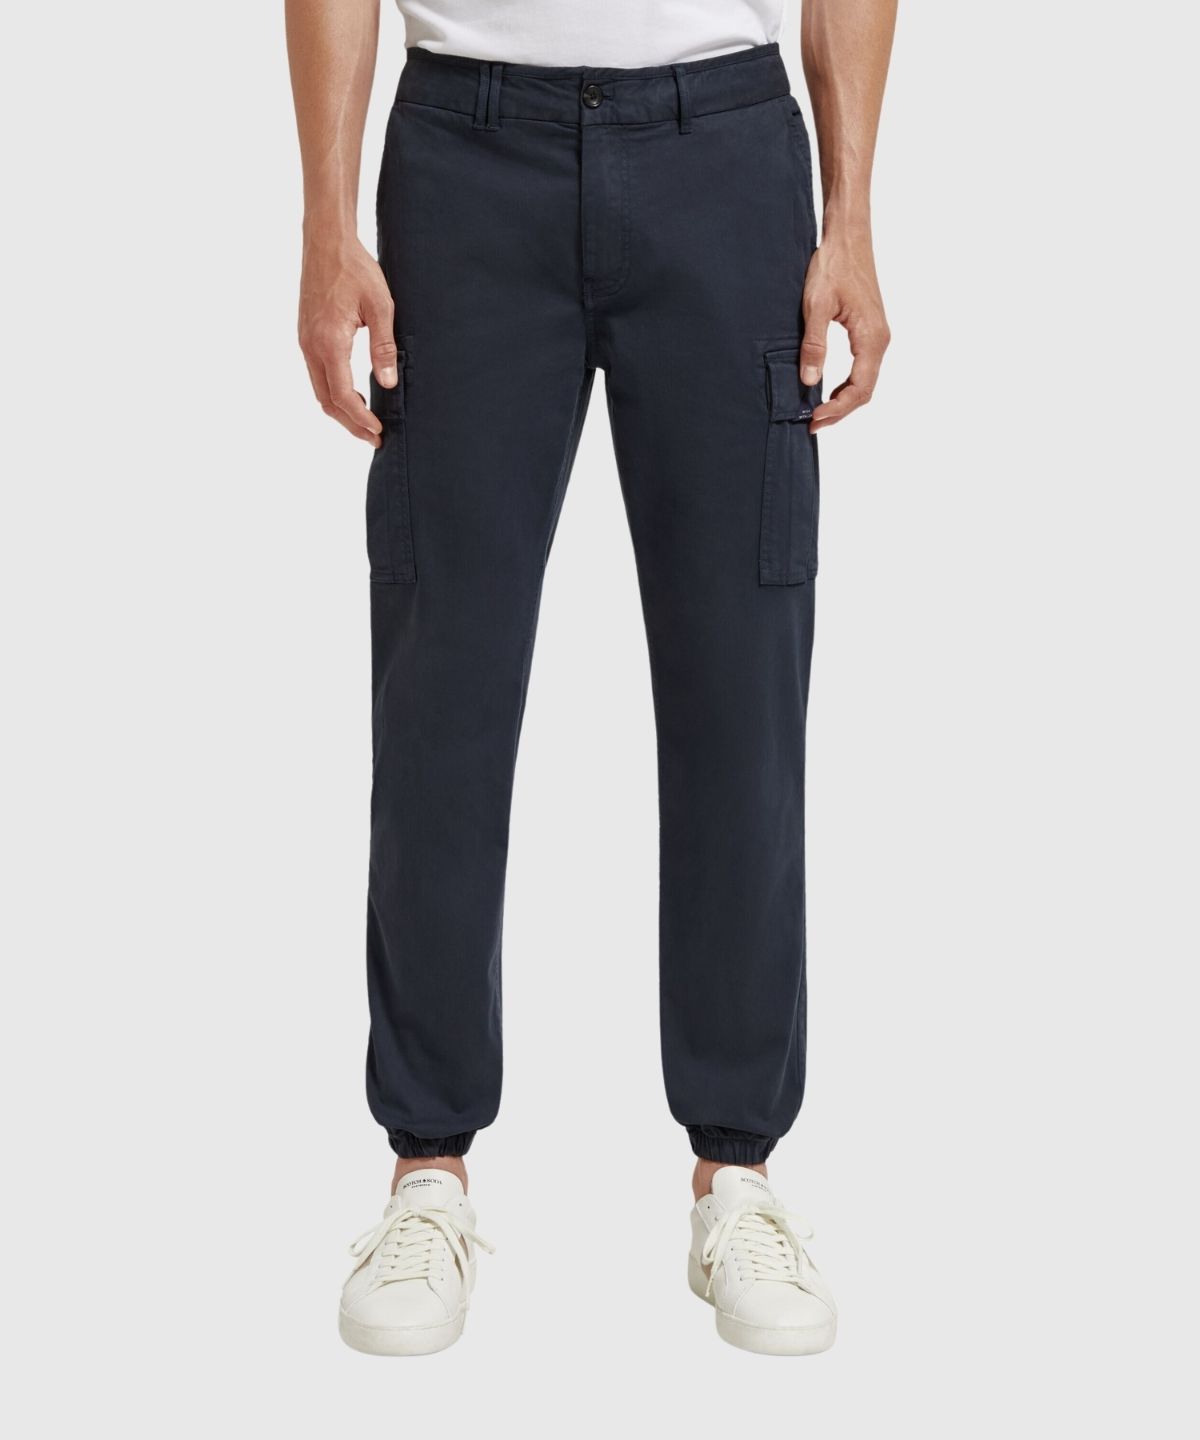 Stuart – Slim-Fit washed structured cargo pants